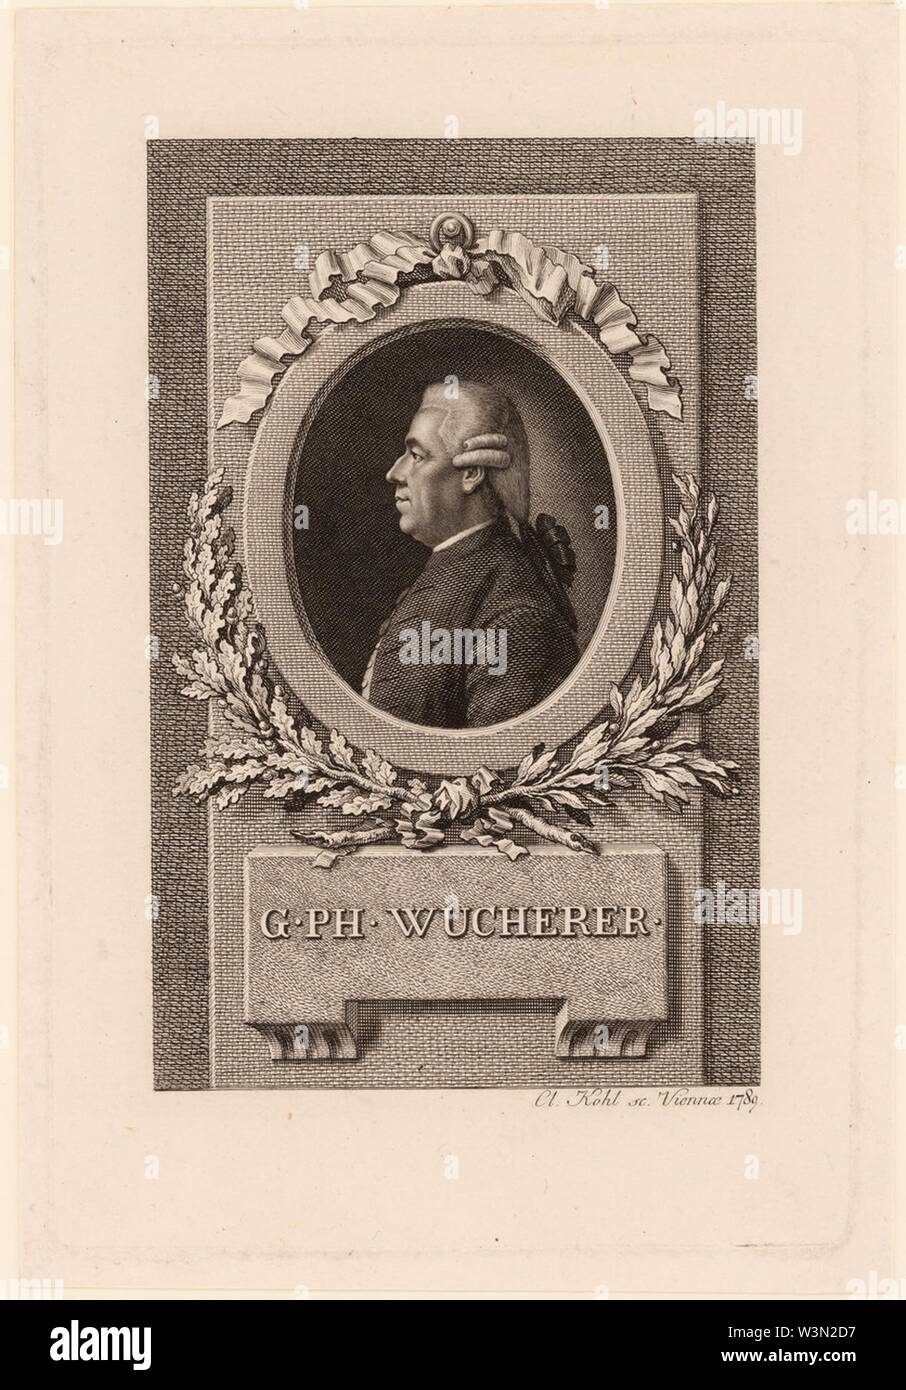 Clemens Kohl – Georg Philipp Wucherer 1789. Stock Photo